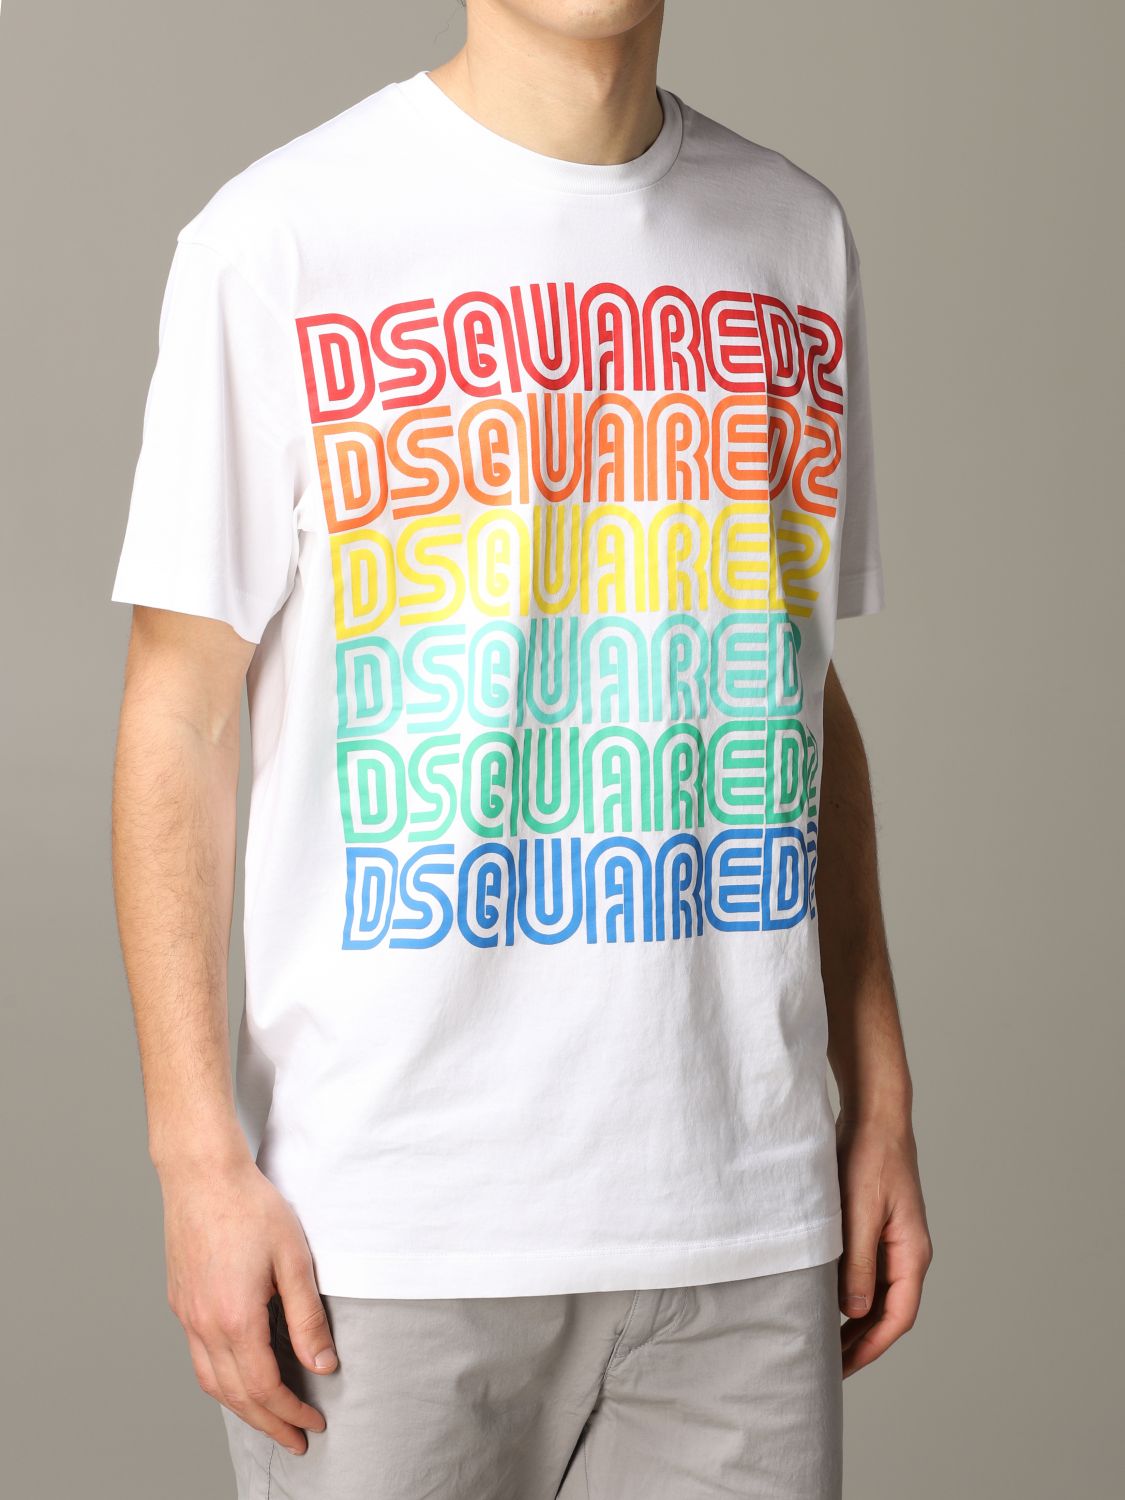 dsquared2 short sleeve shirt